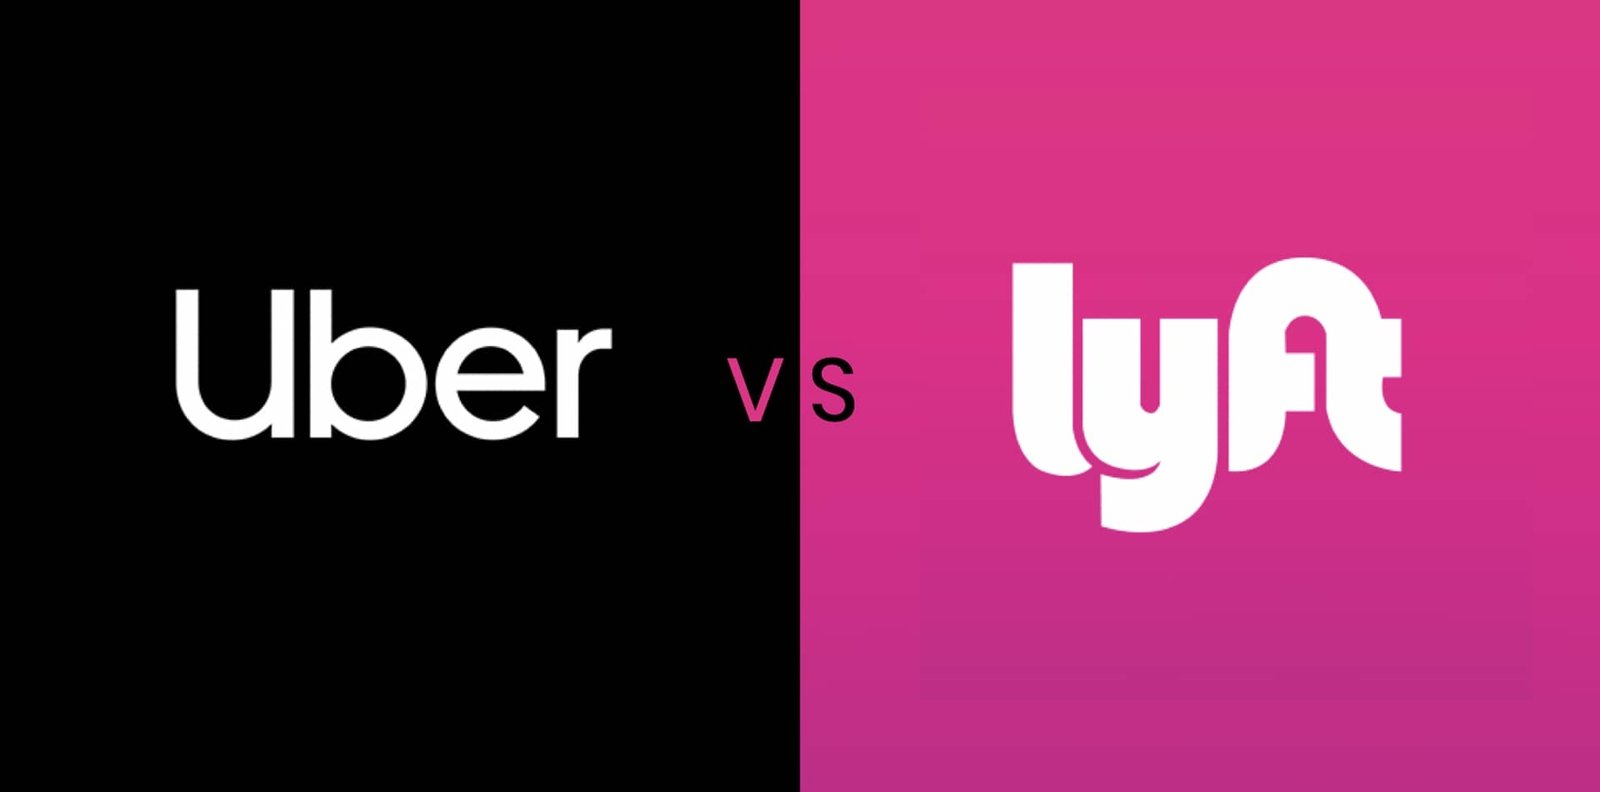 Uber vs. Lyft: Comparing Ride-Hailing Services